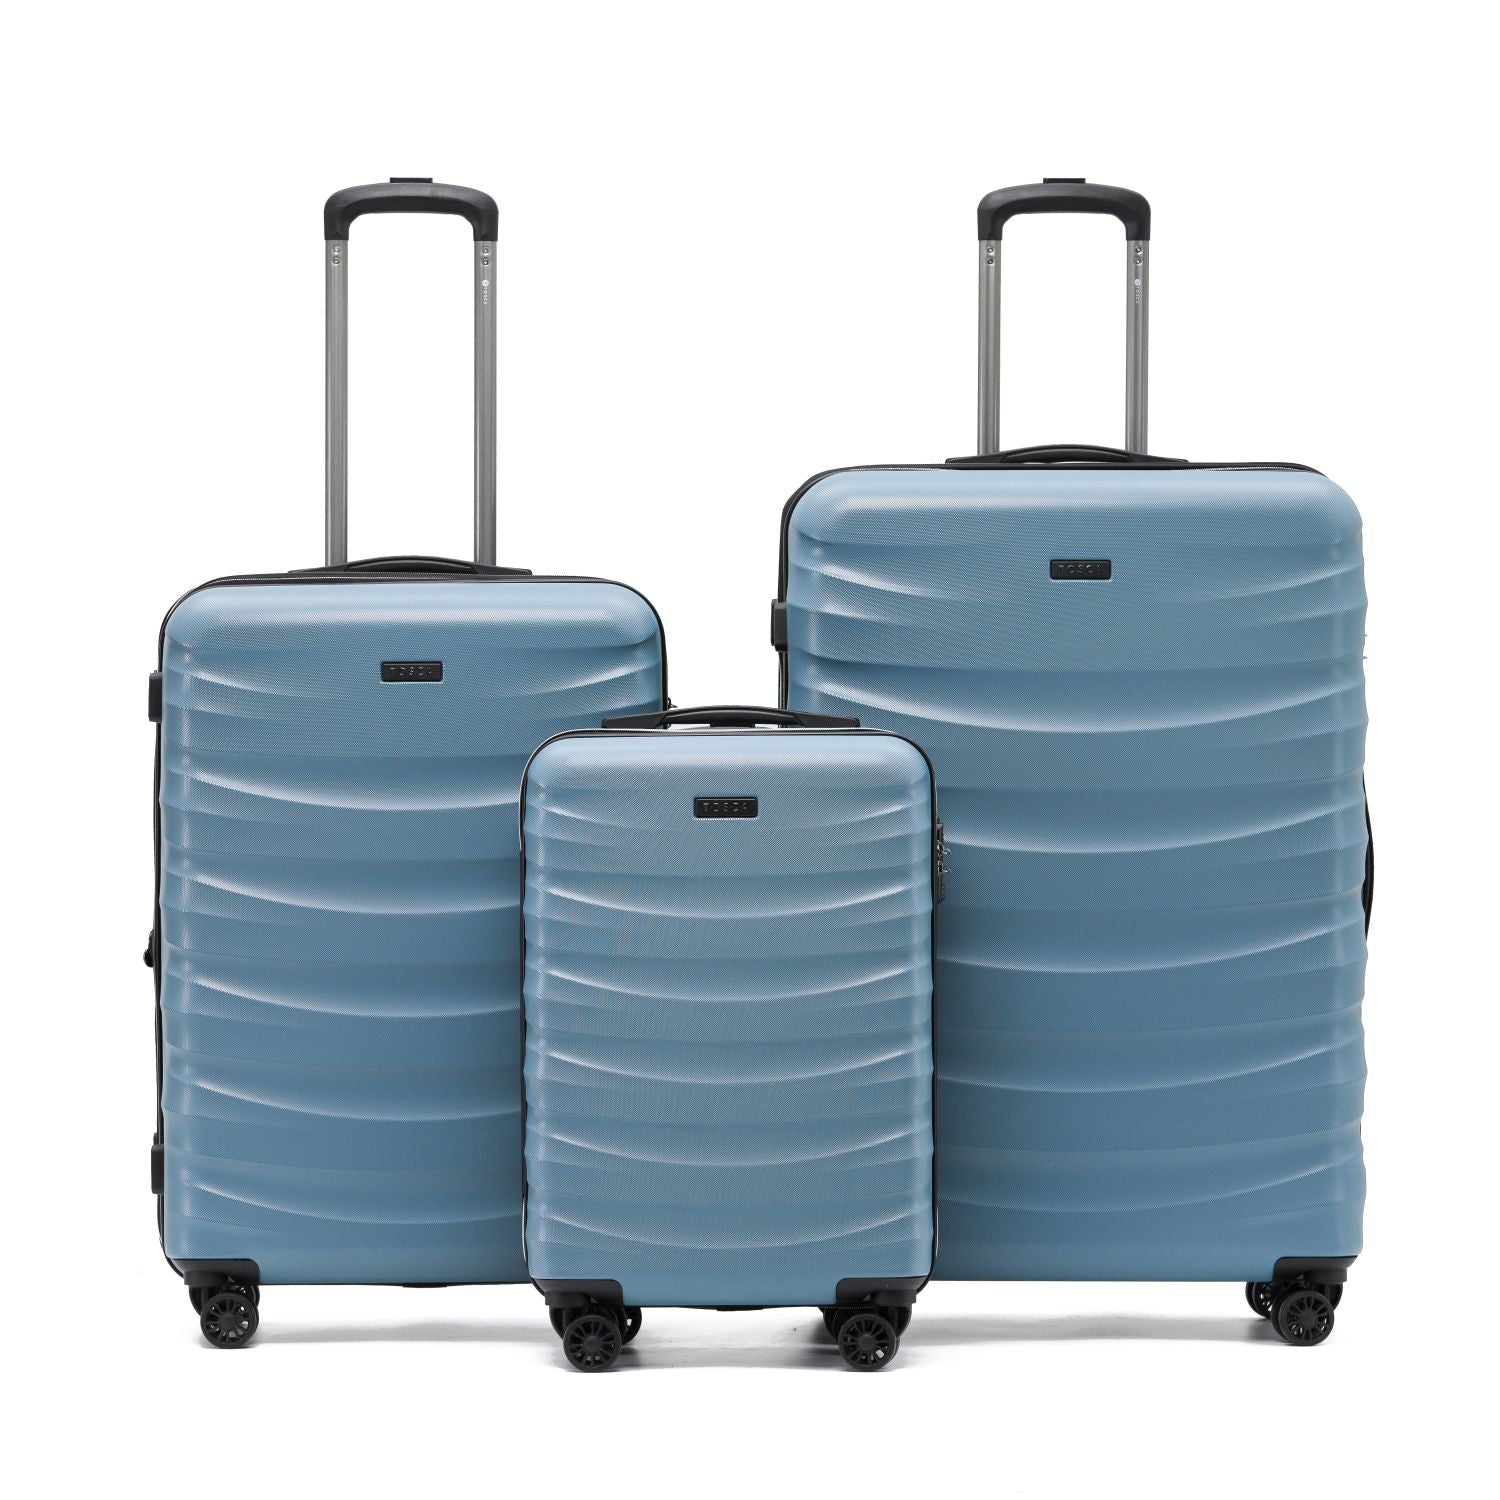 Tosca - Intersteller set of 3 suitcases - Blue - 0